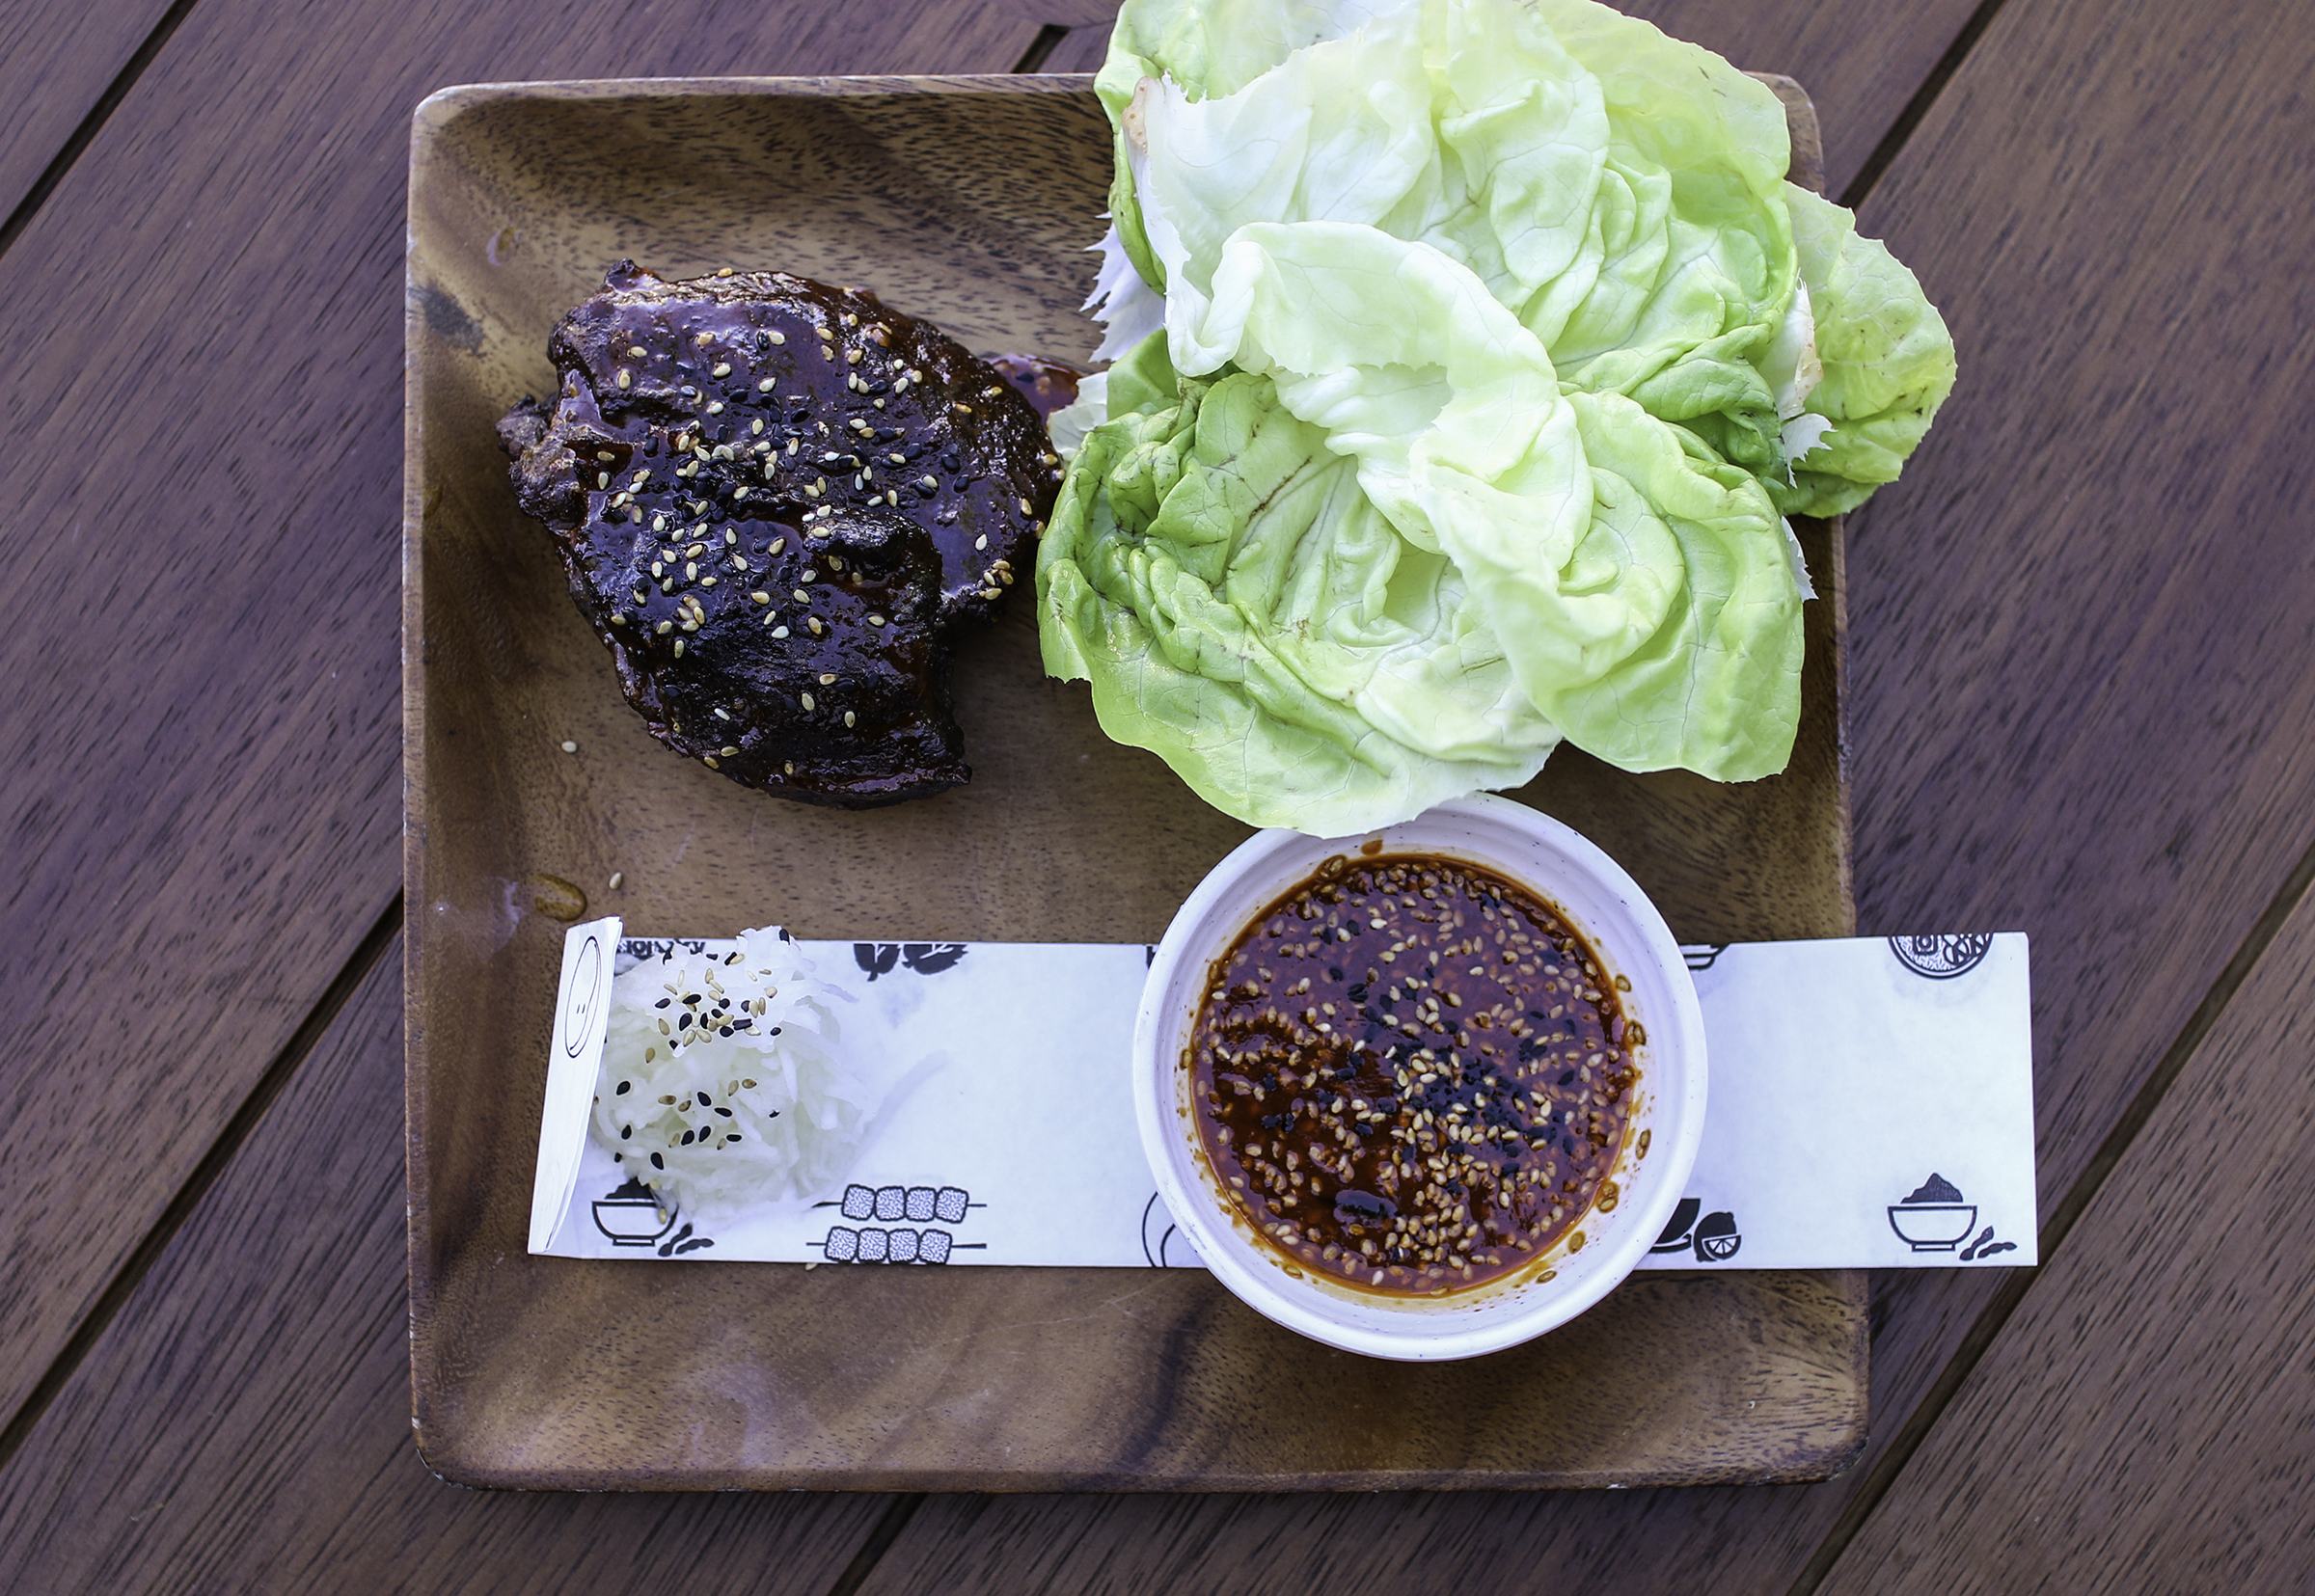  Beef cheek &amp; butter lettuce wraps, Korean miso &amp; pickled daikon 